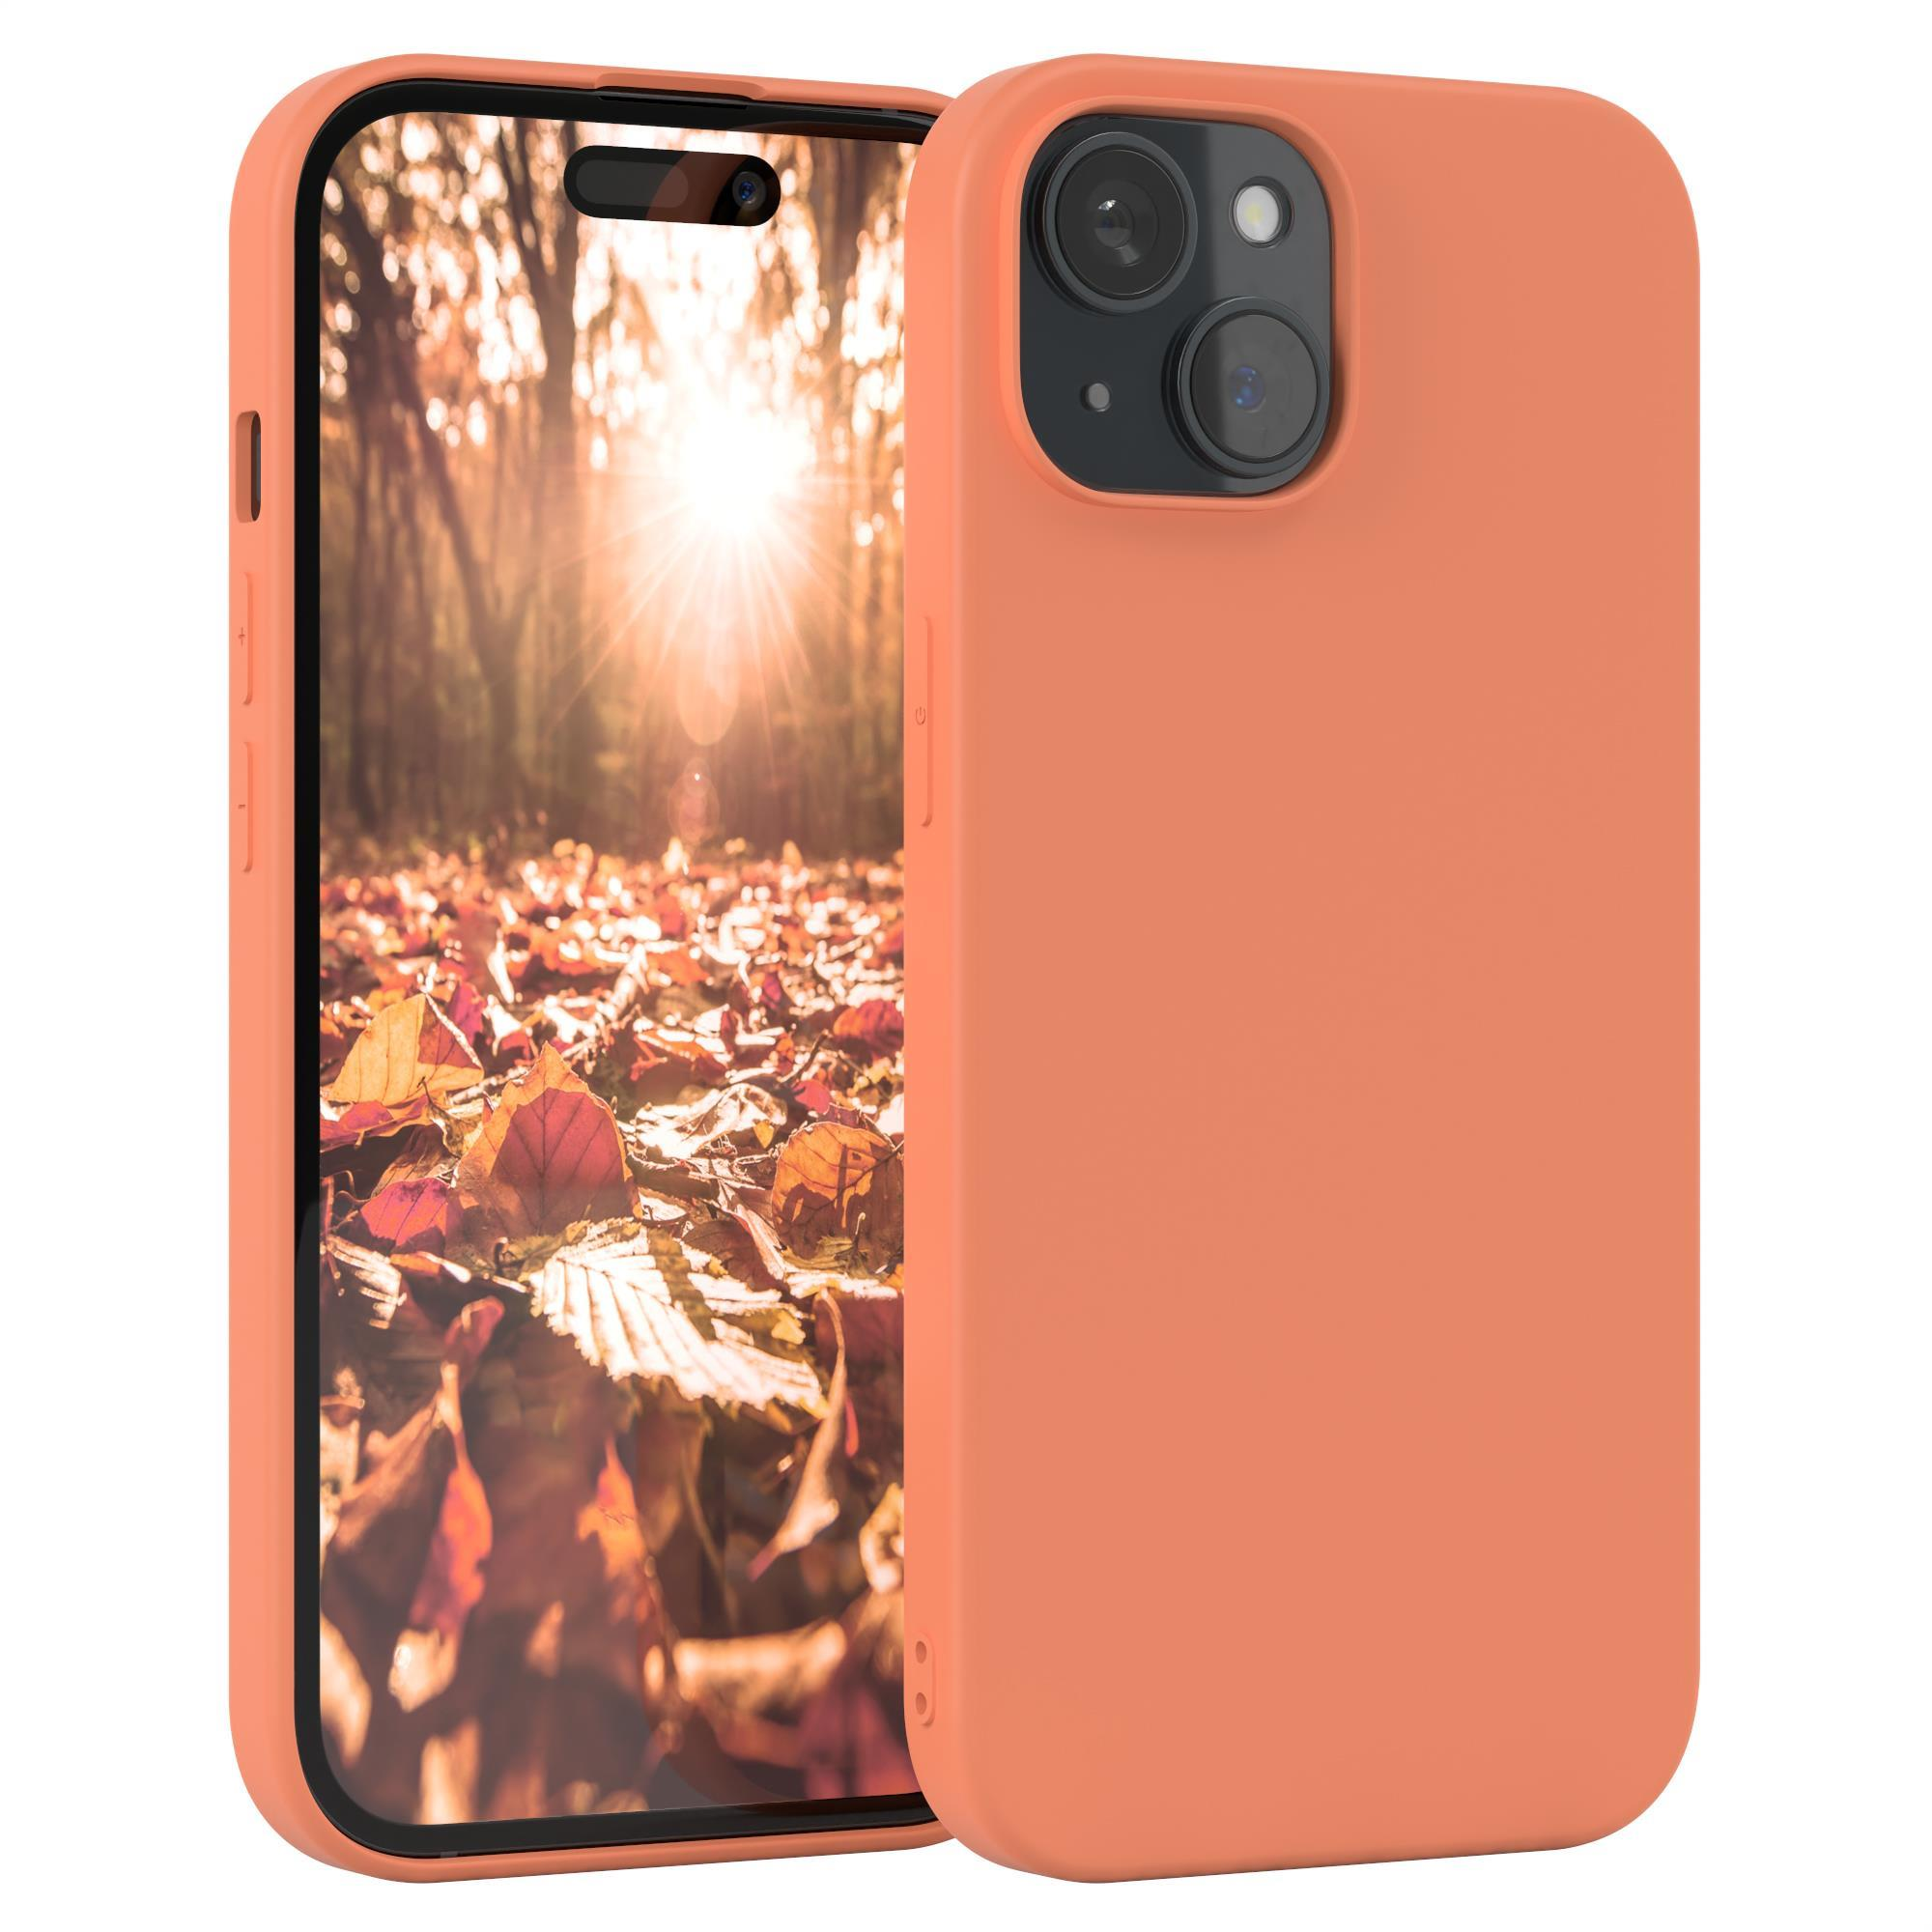 EAZY CASE TPU Silikon Handycase Apple, 15, iPhone Backcover, Orange Matt